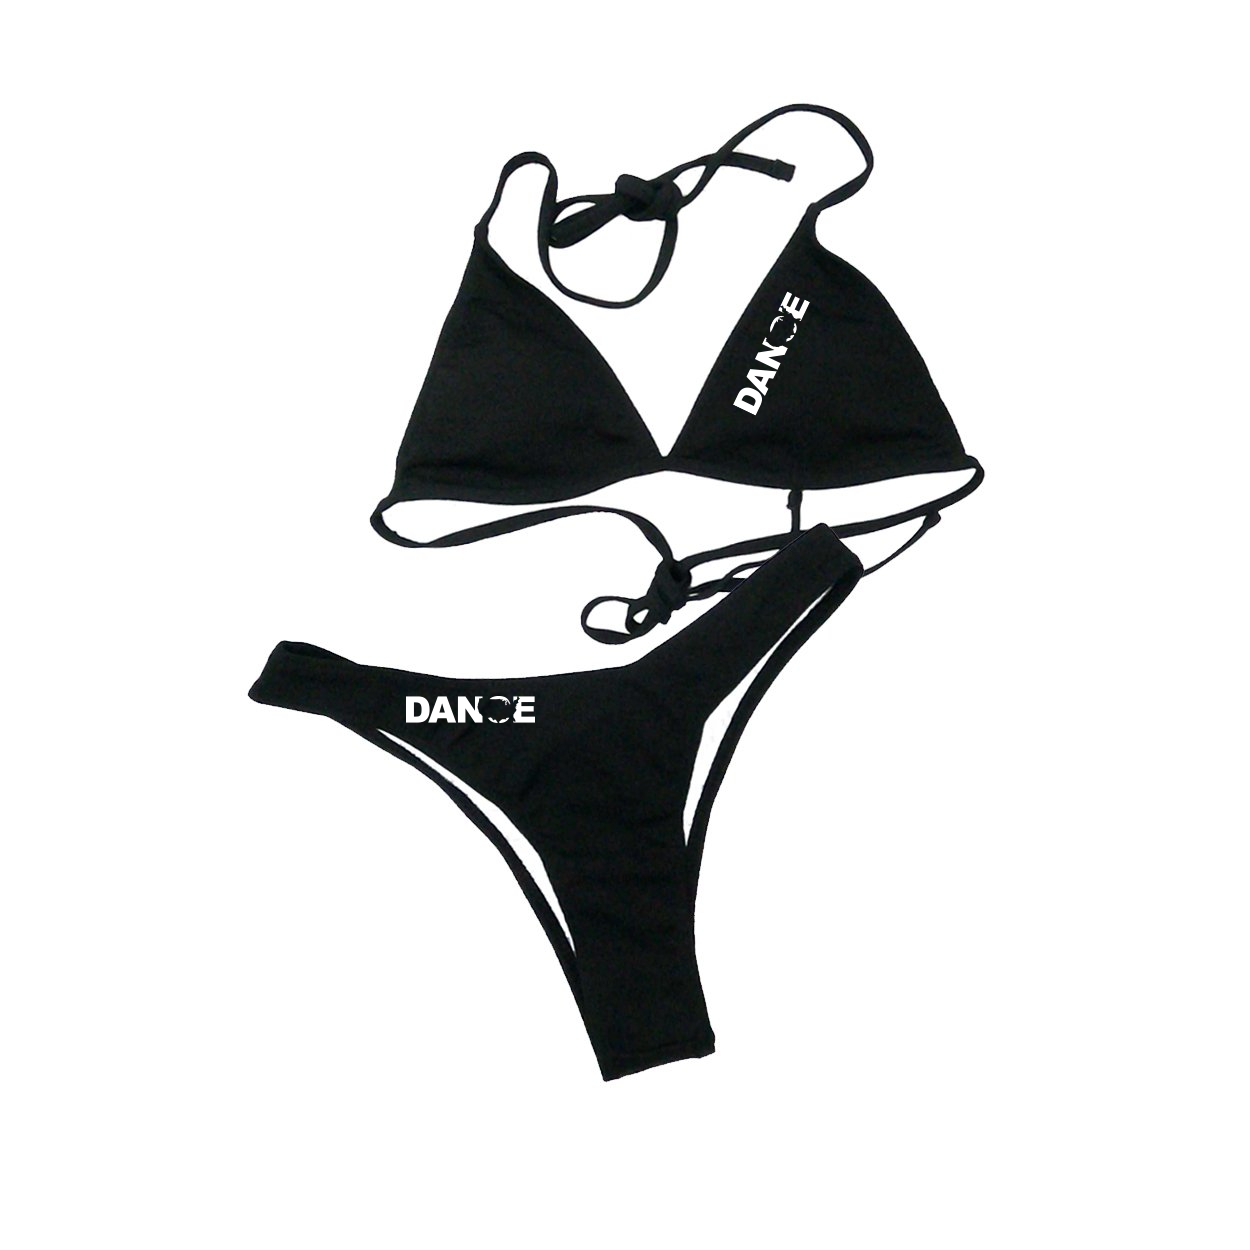 Dance United States Classic Womens Padded Halter Triangle Two-Piece Swimsuit Basics Bikini Black (White Logo)